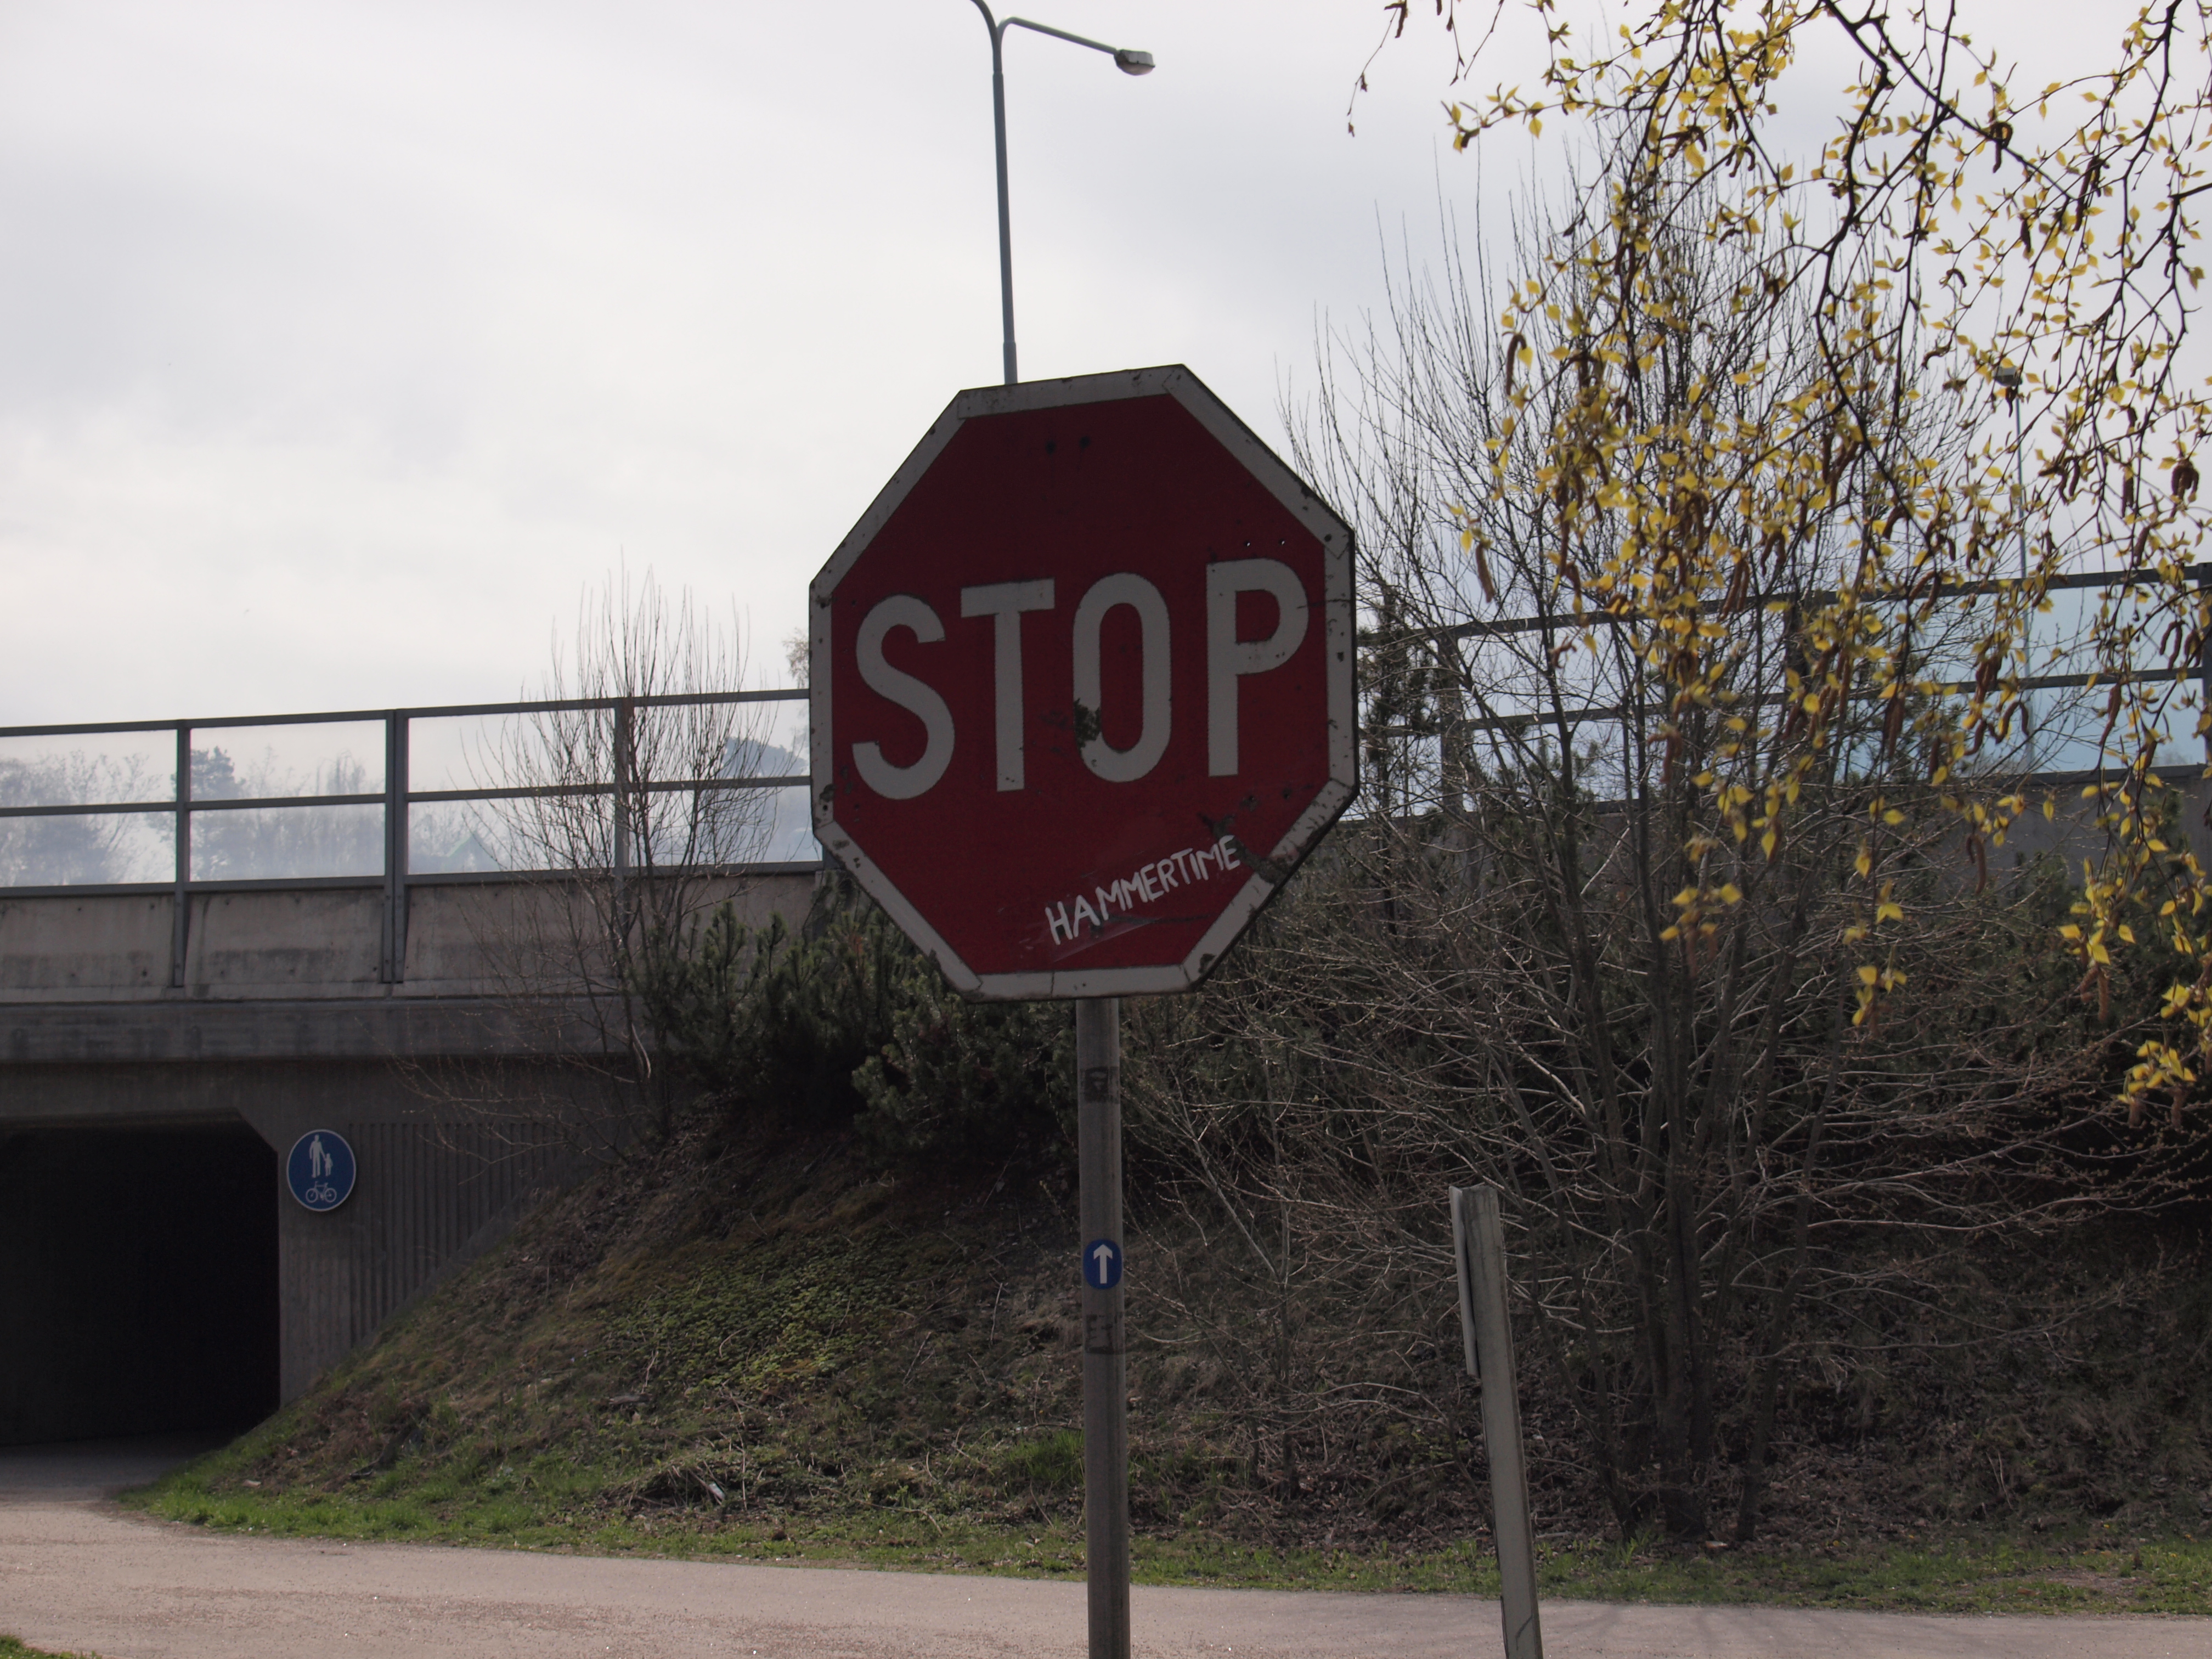 File:Hammertime stop sign near Espoo.jpg - Wikimedia Commons